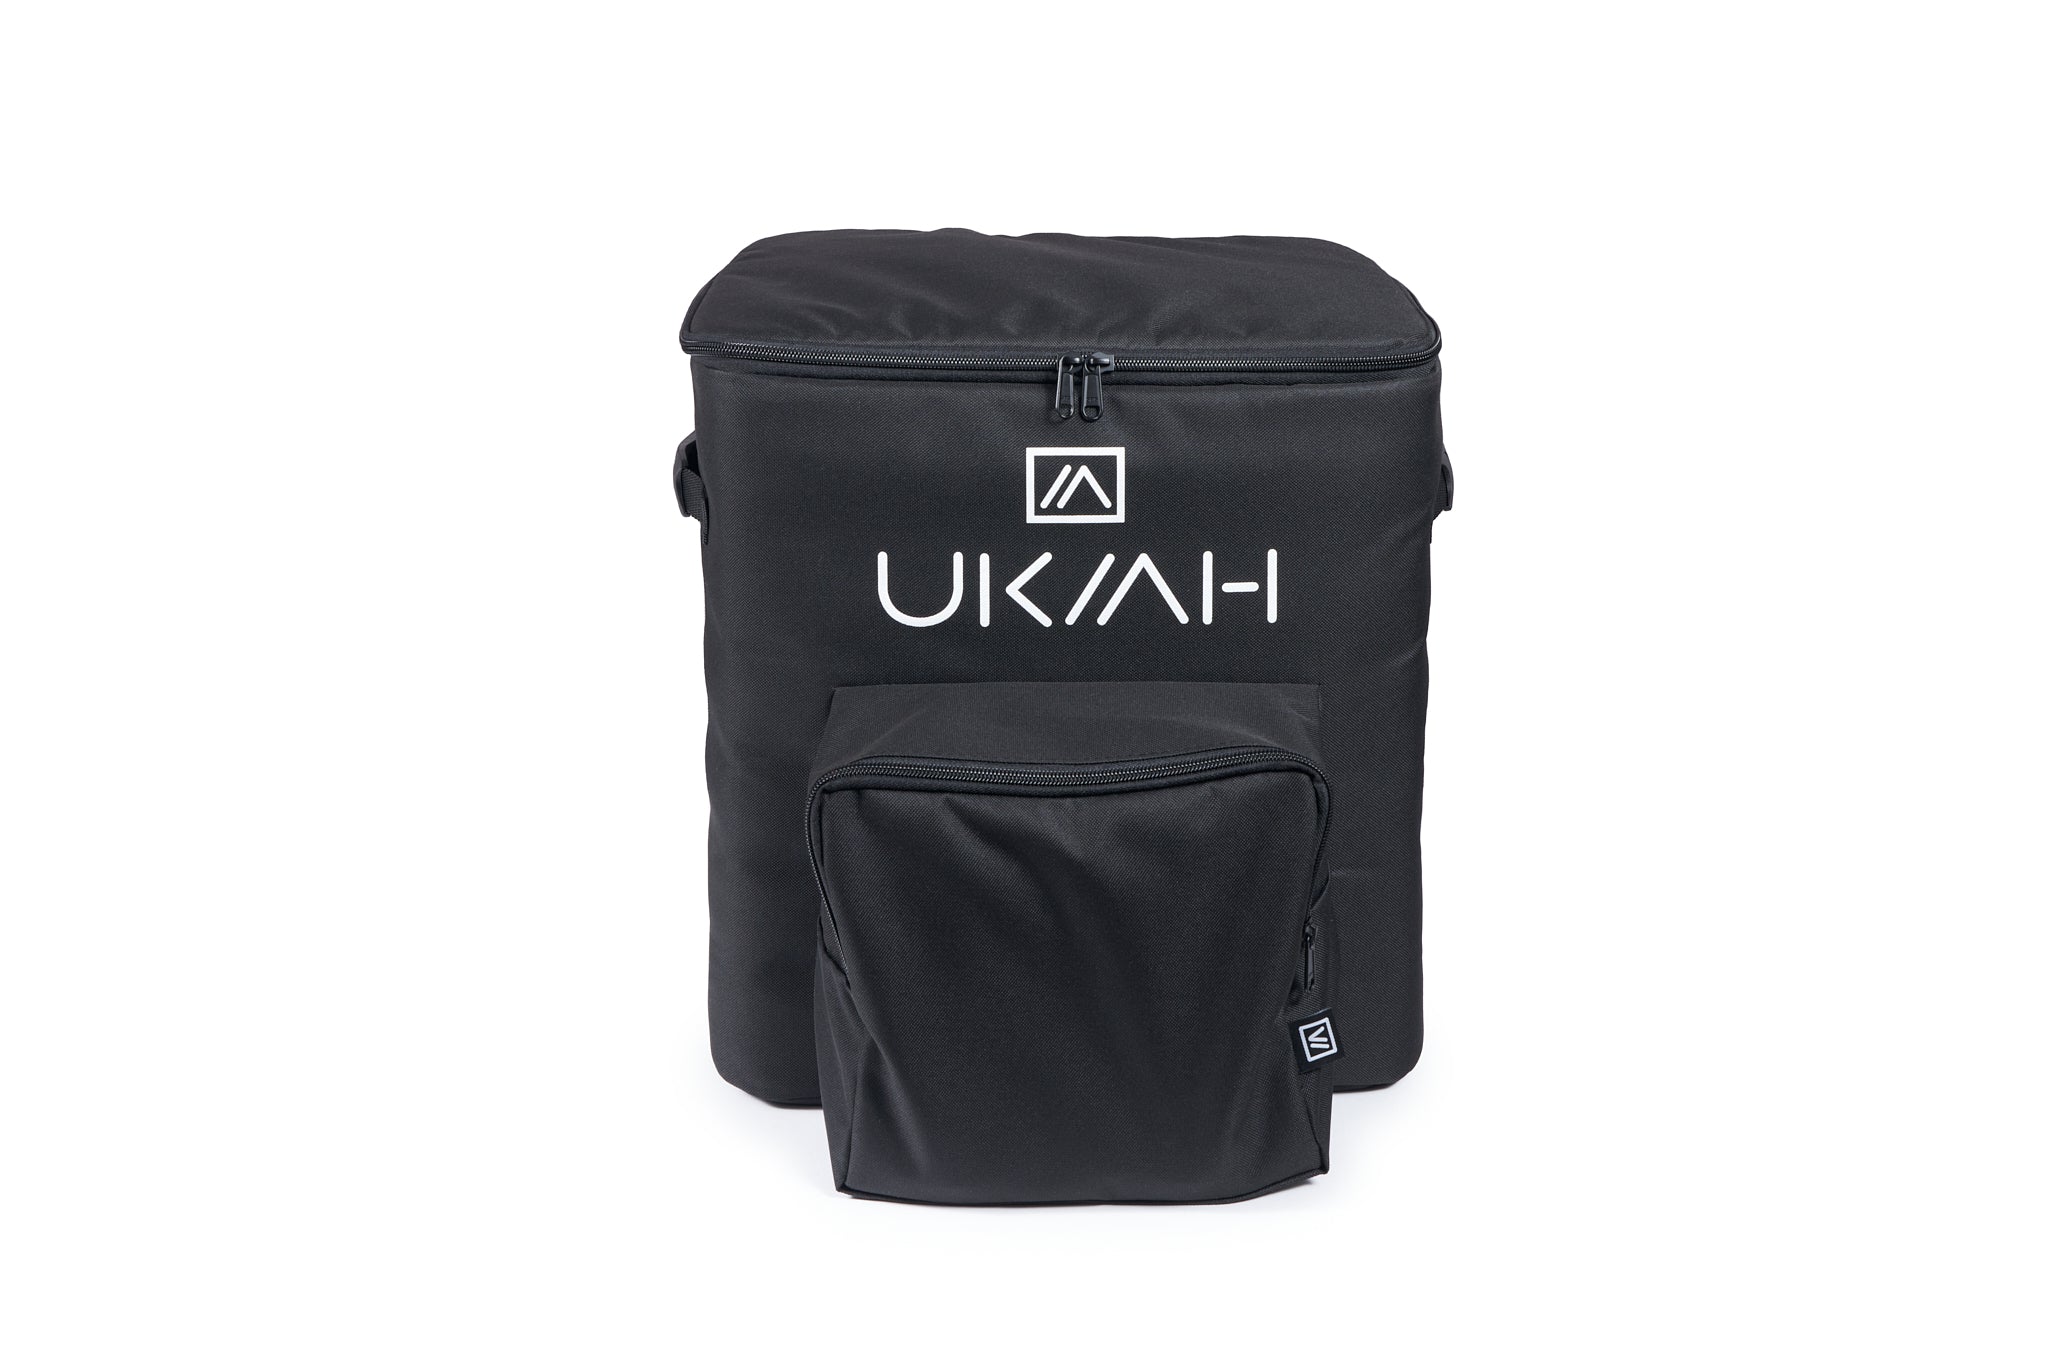 Ukiah Co. Audio Capable Products